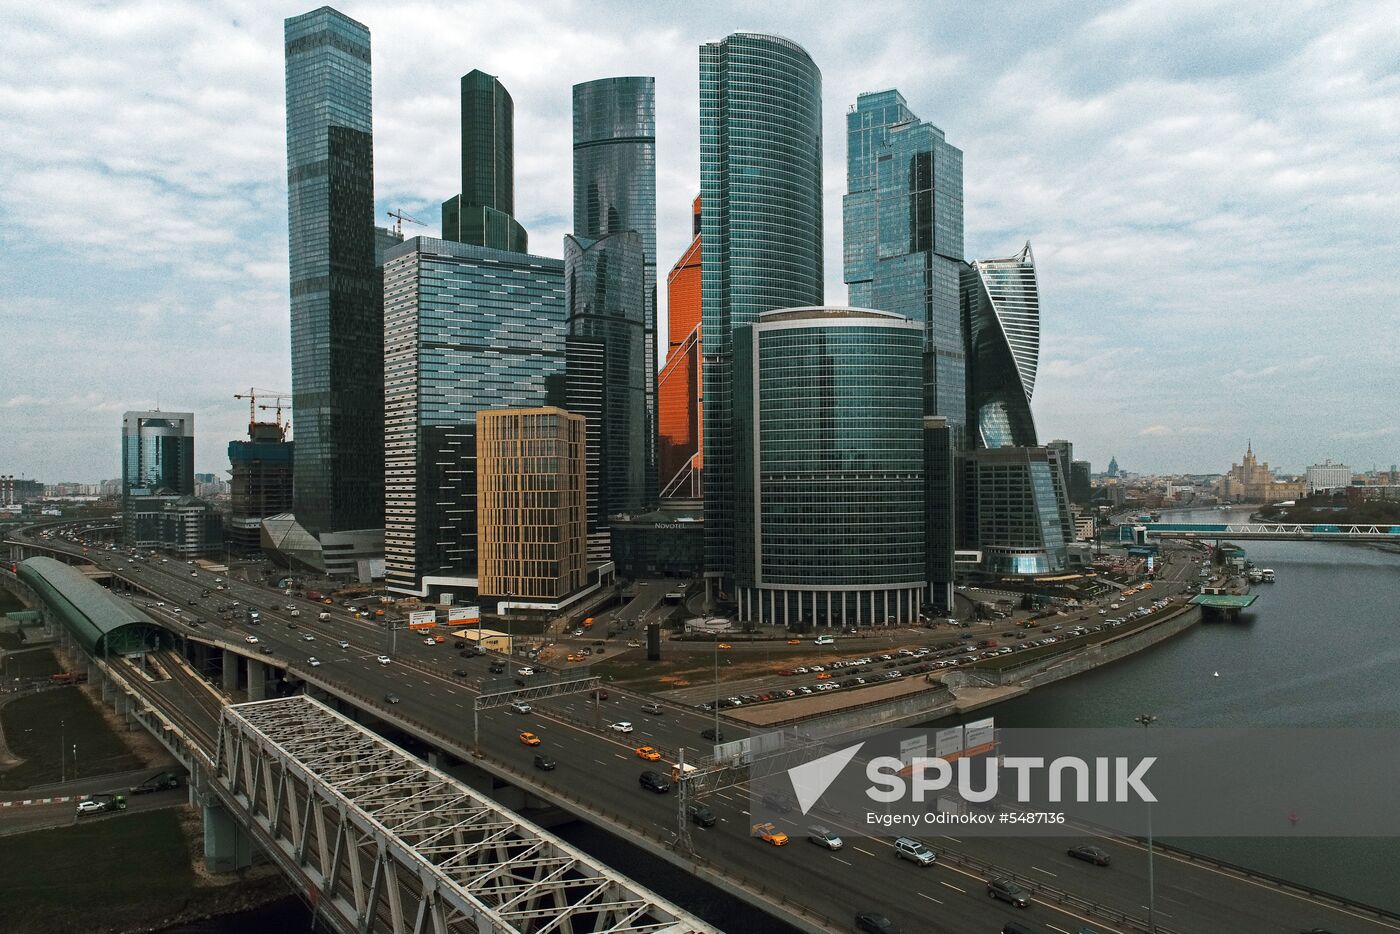 Moscow City international business center